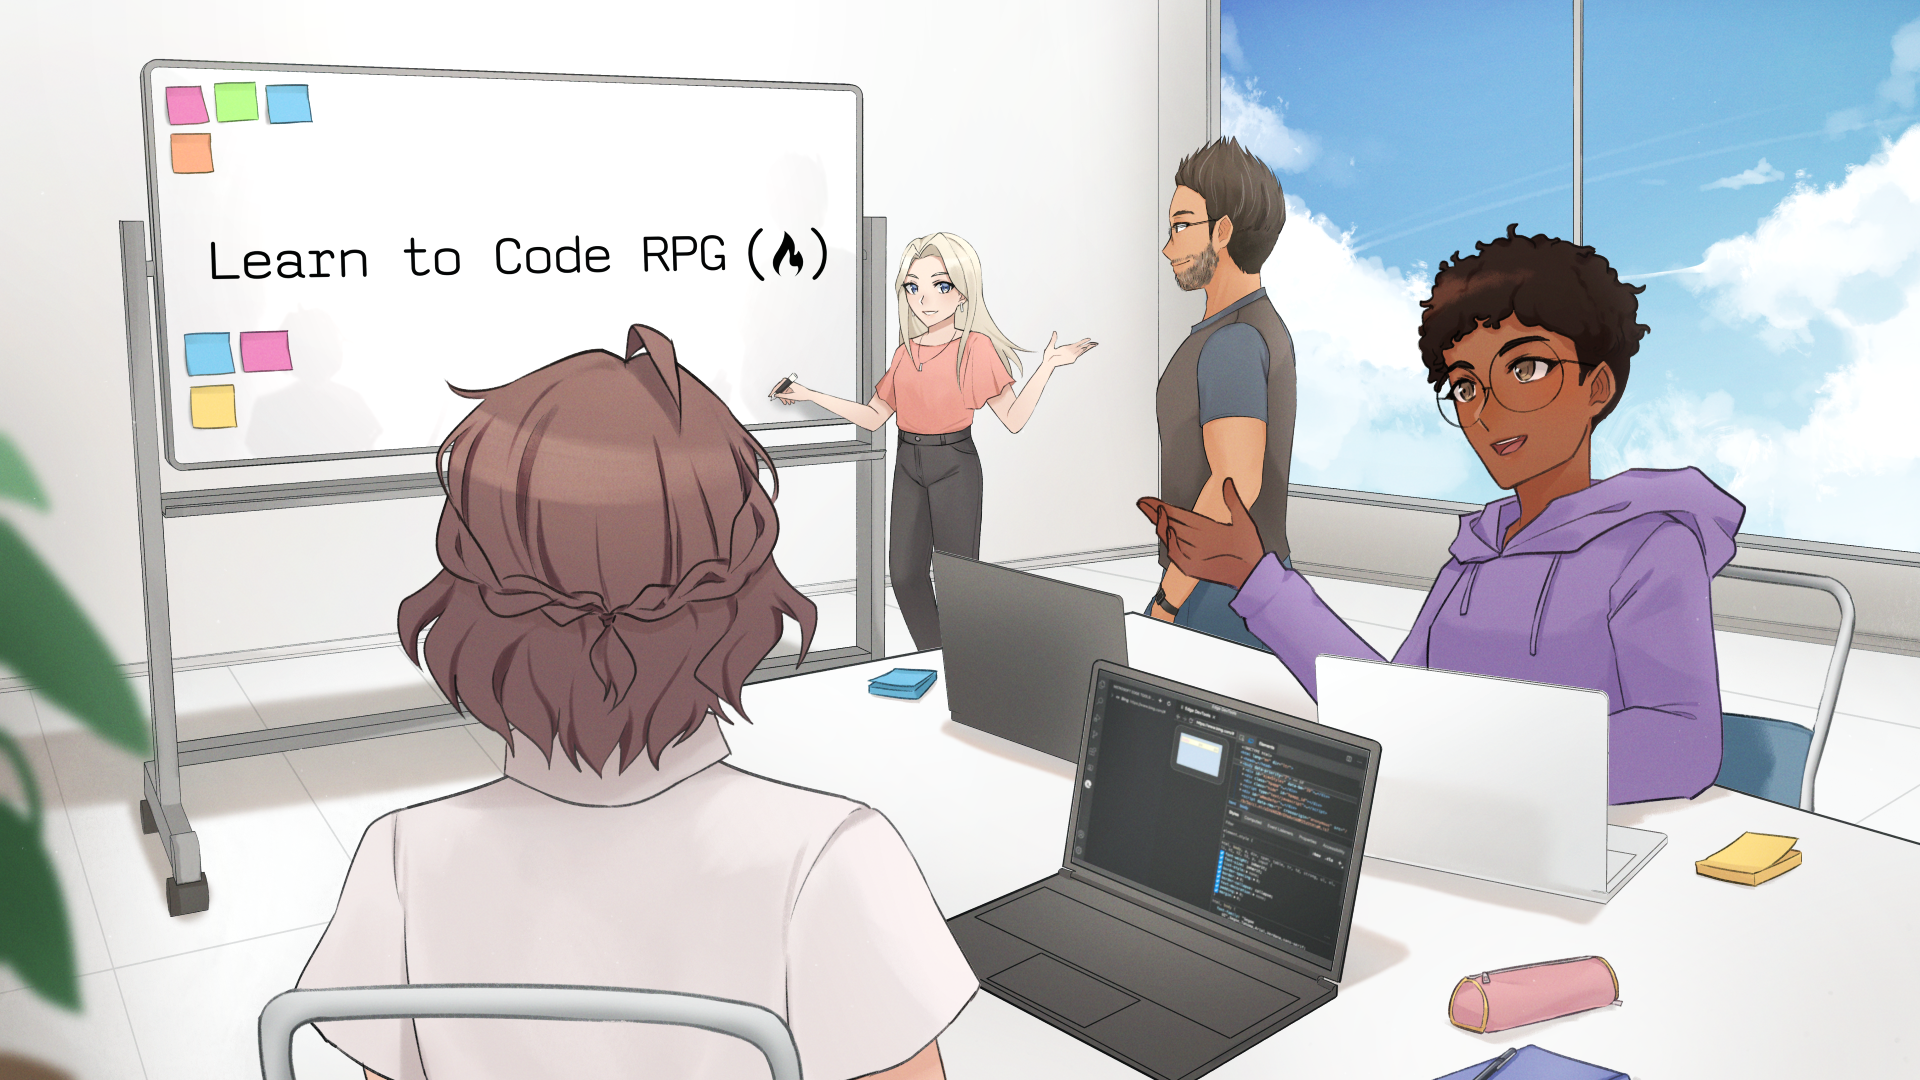 Aprende a programar RPG: Un videojuego de novela visual en el que aprendes conceptos de informática